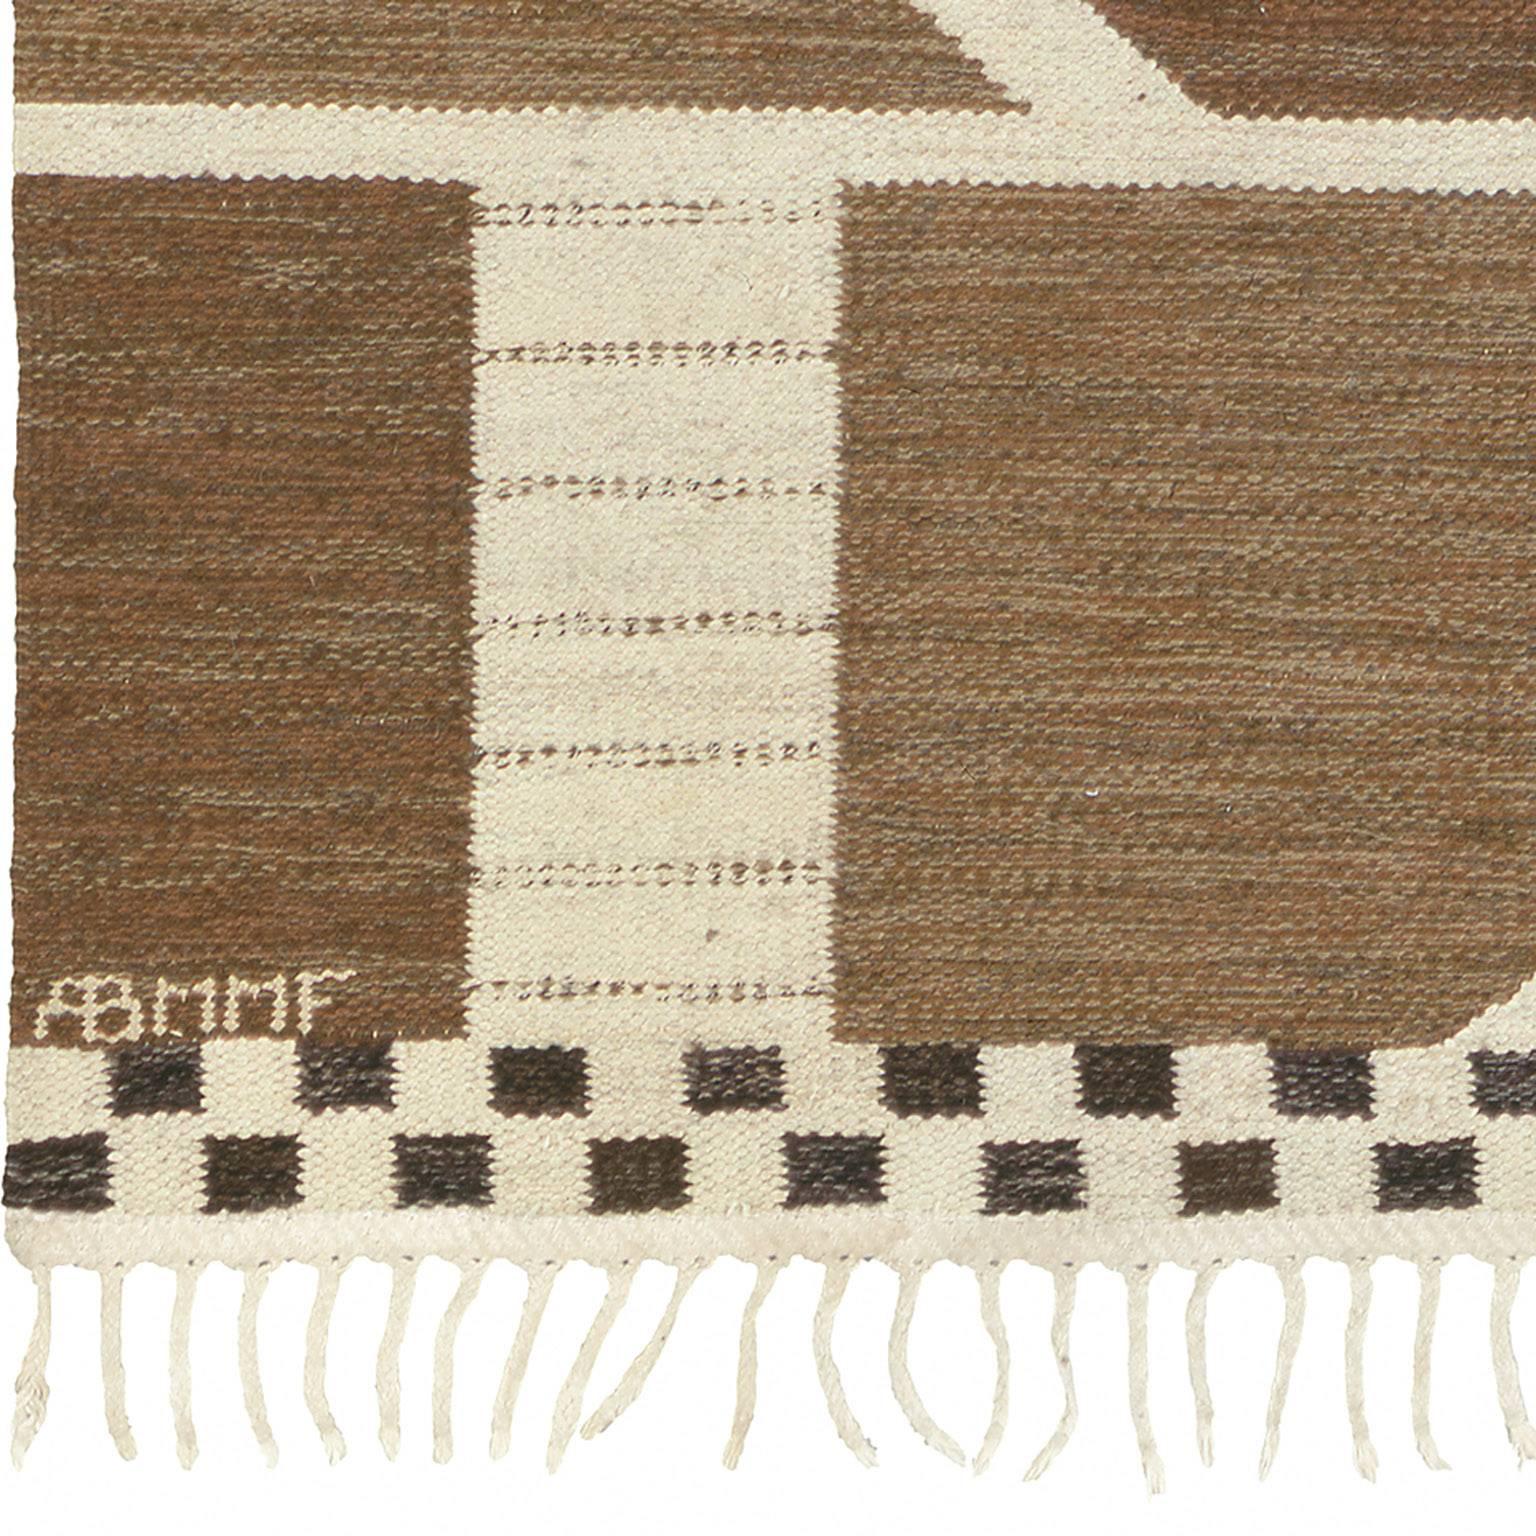 Swedish flat-weave, initialed: 